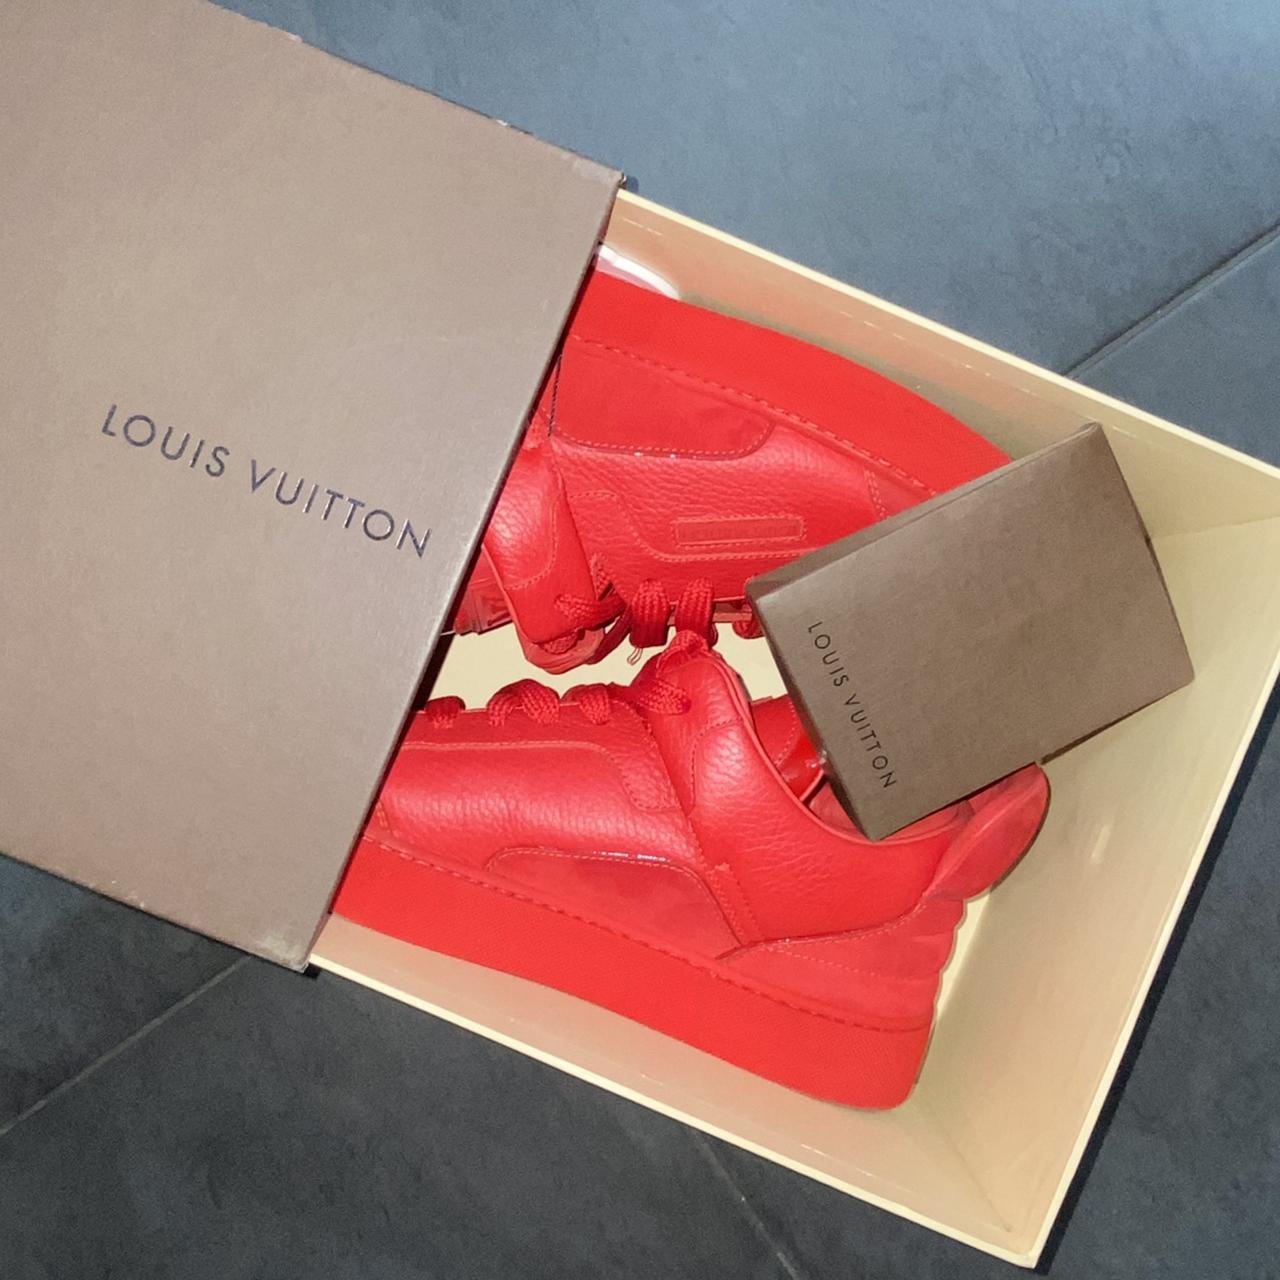 Louis Vuitton Don Kanye West Red Jasper Year - Depop